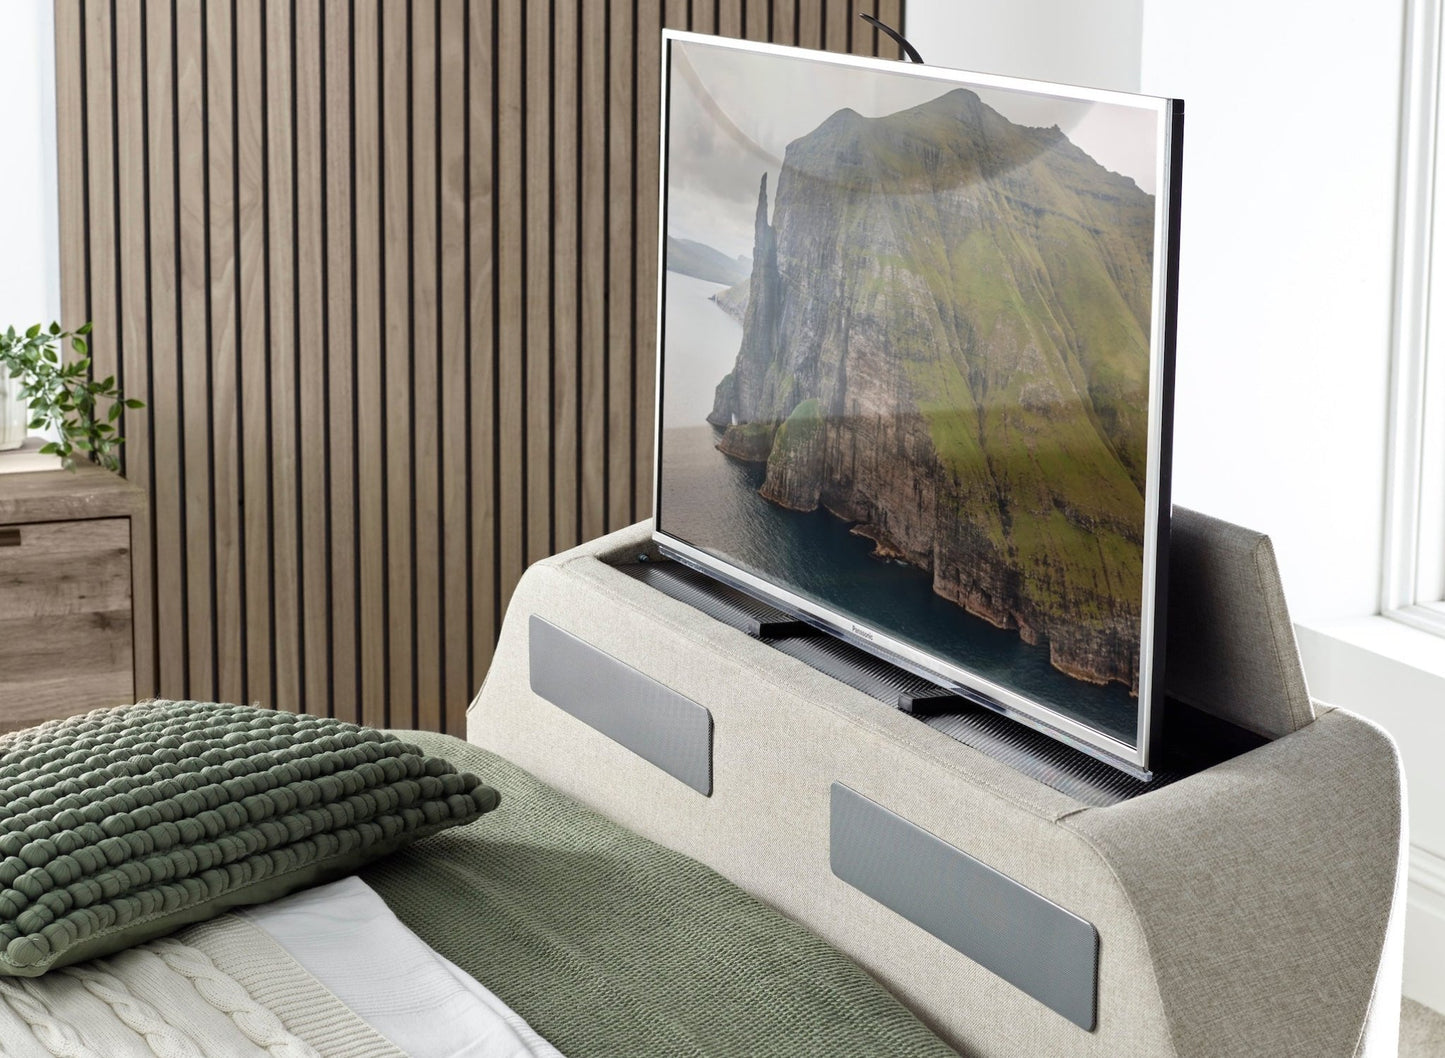 Titan 4.1 Multi Media Ottoman Storage TV Bed - King size in Oatmeal - TV Beds Northwest - TOT150OA - kaydian - kingsizetvbed